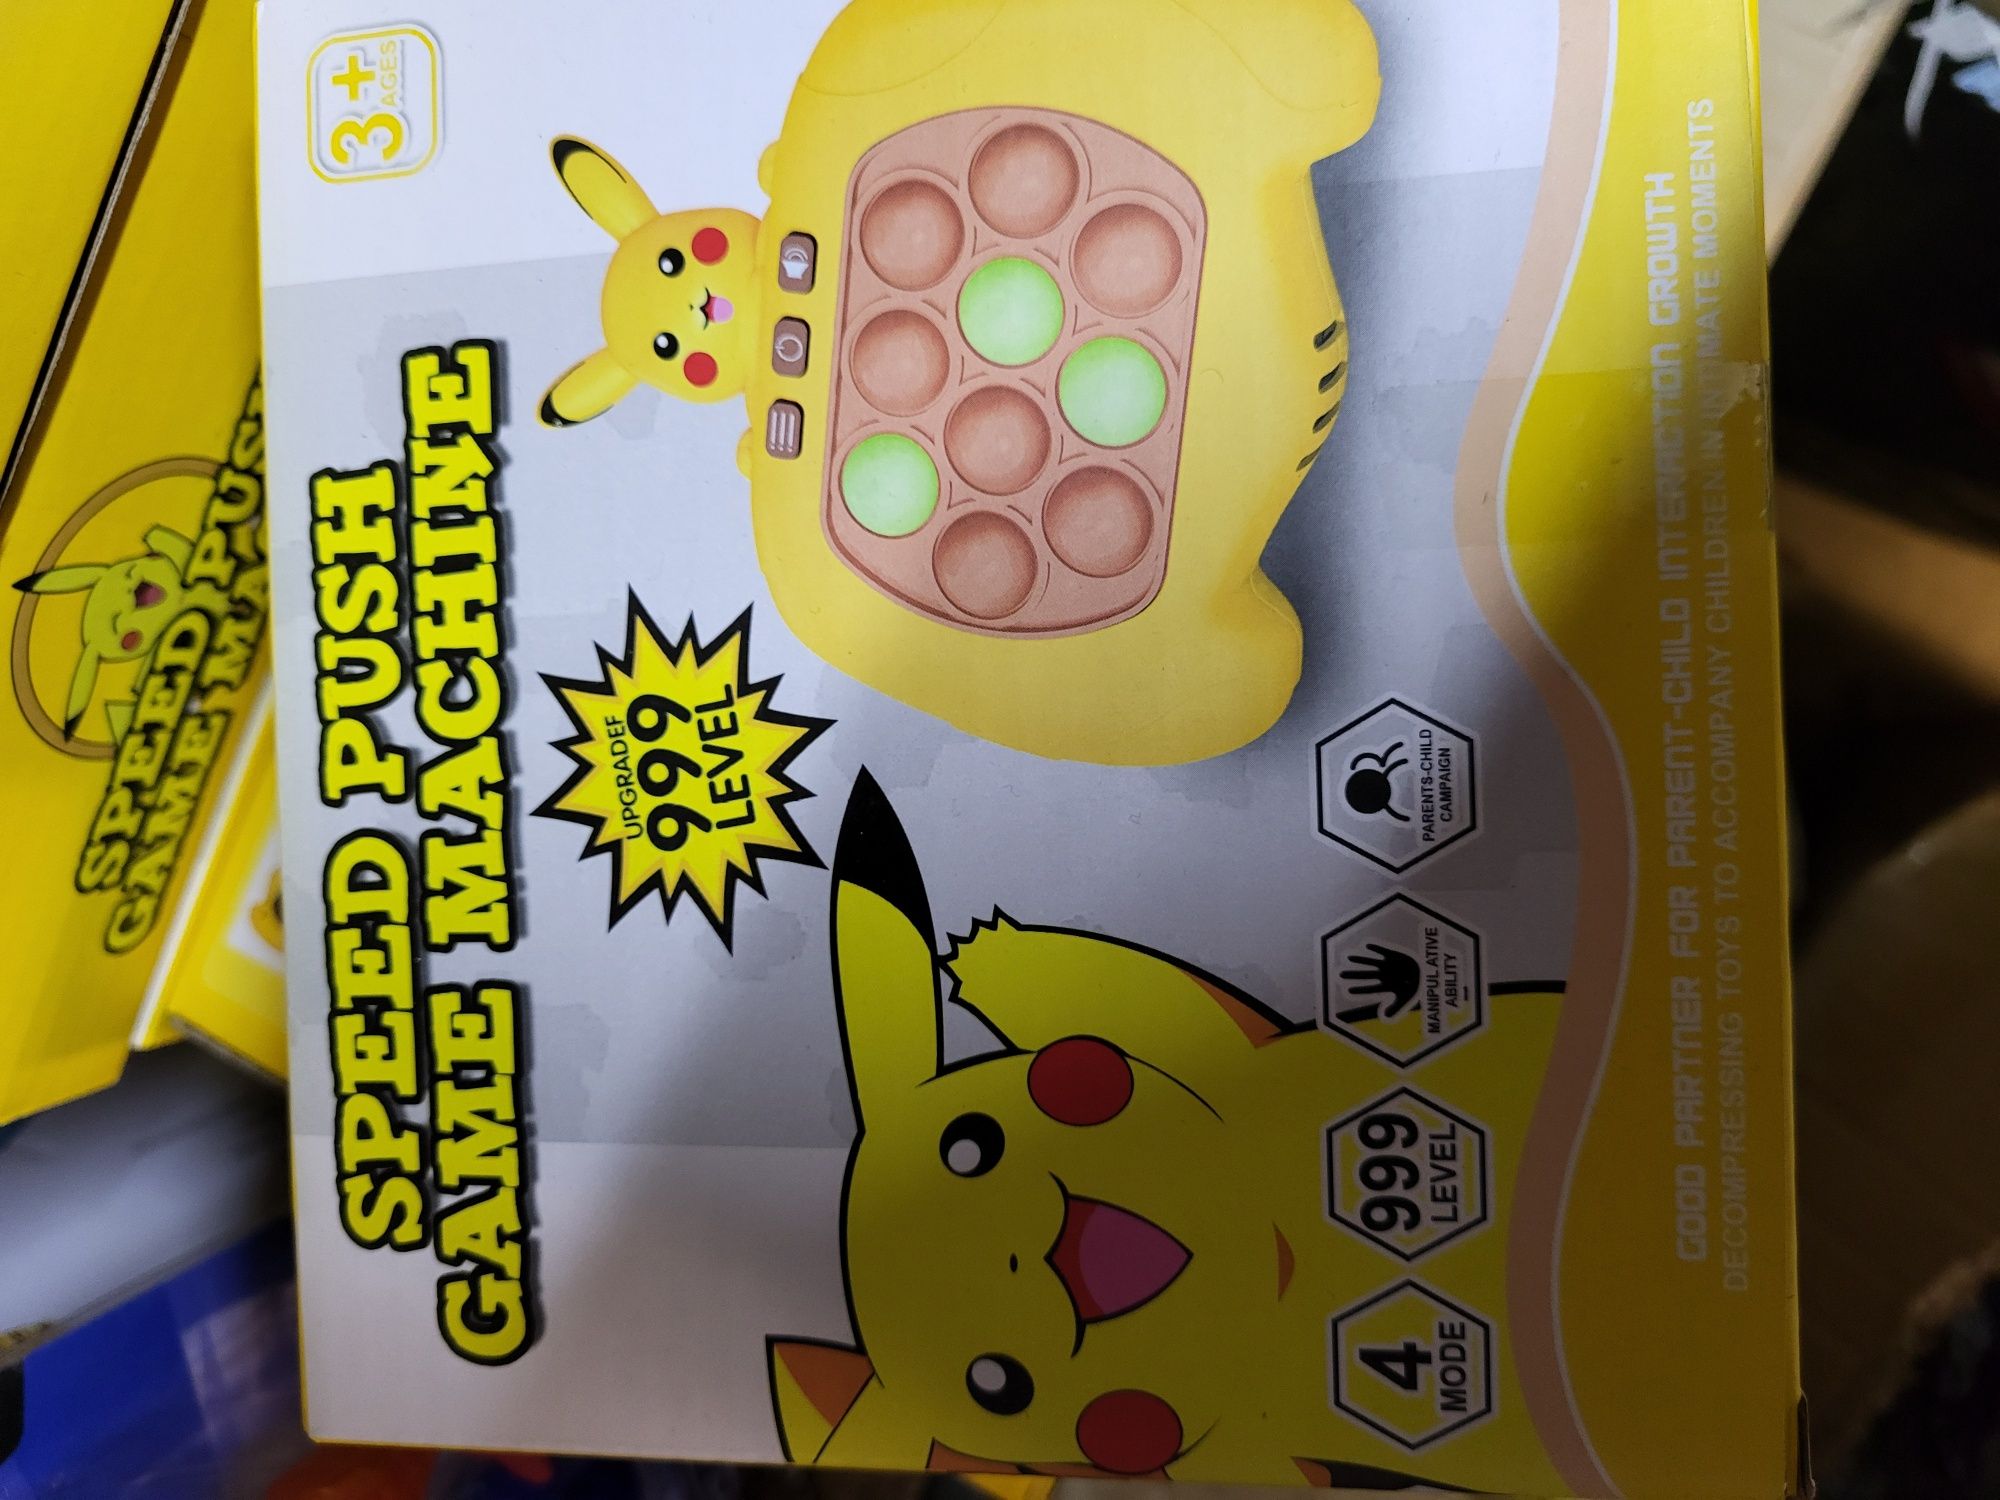 Gra popit pikachu 999 leveli elaktroniczna